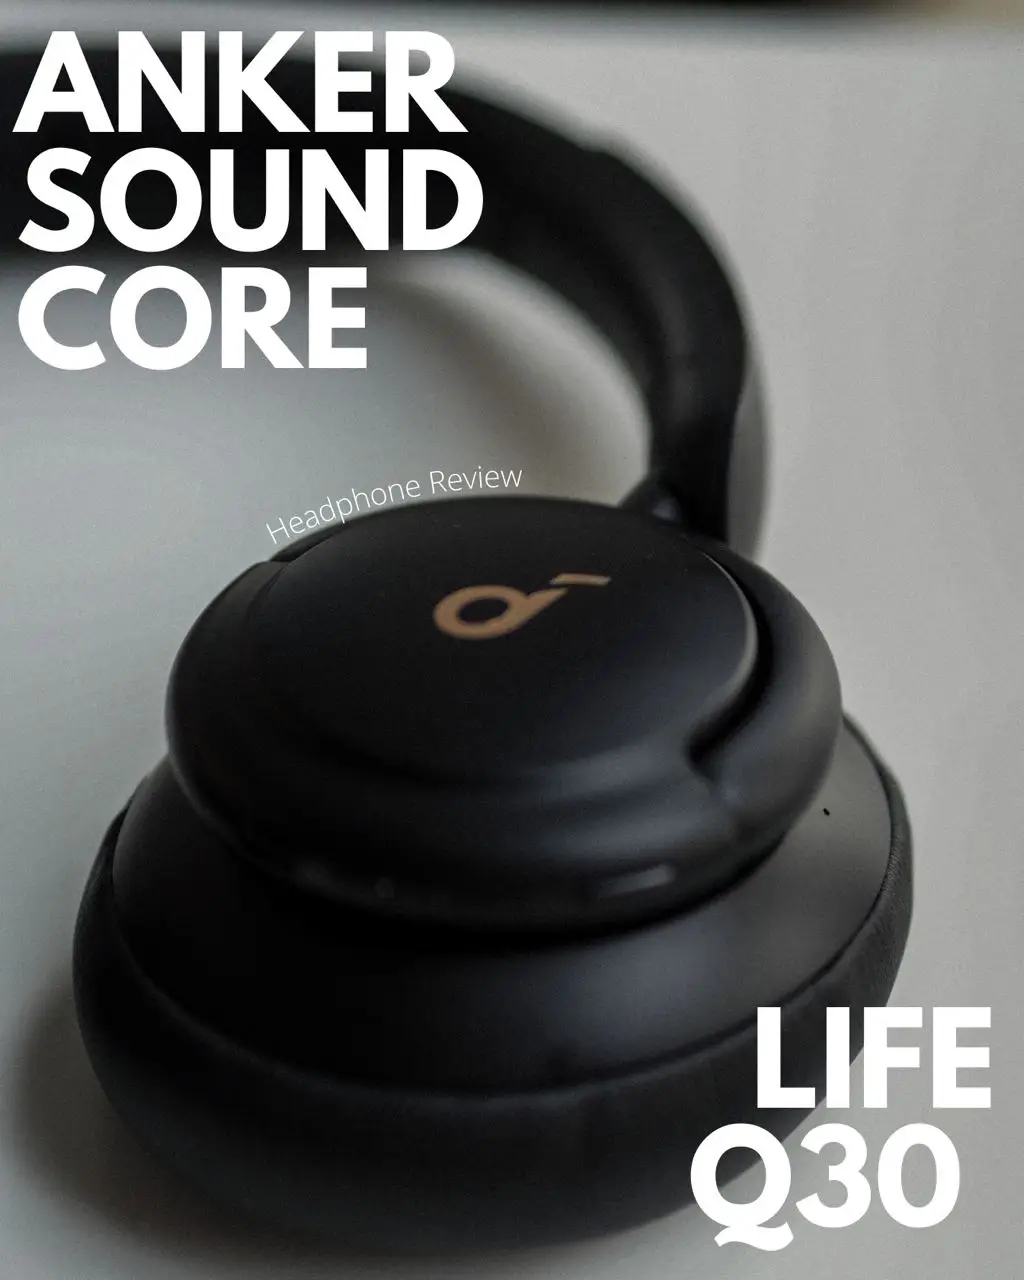 Take $20 Off of Anker Soundcore Life Q30 Headphones